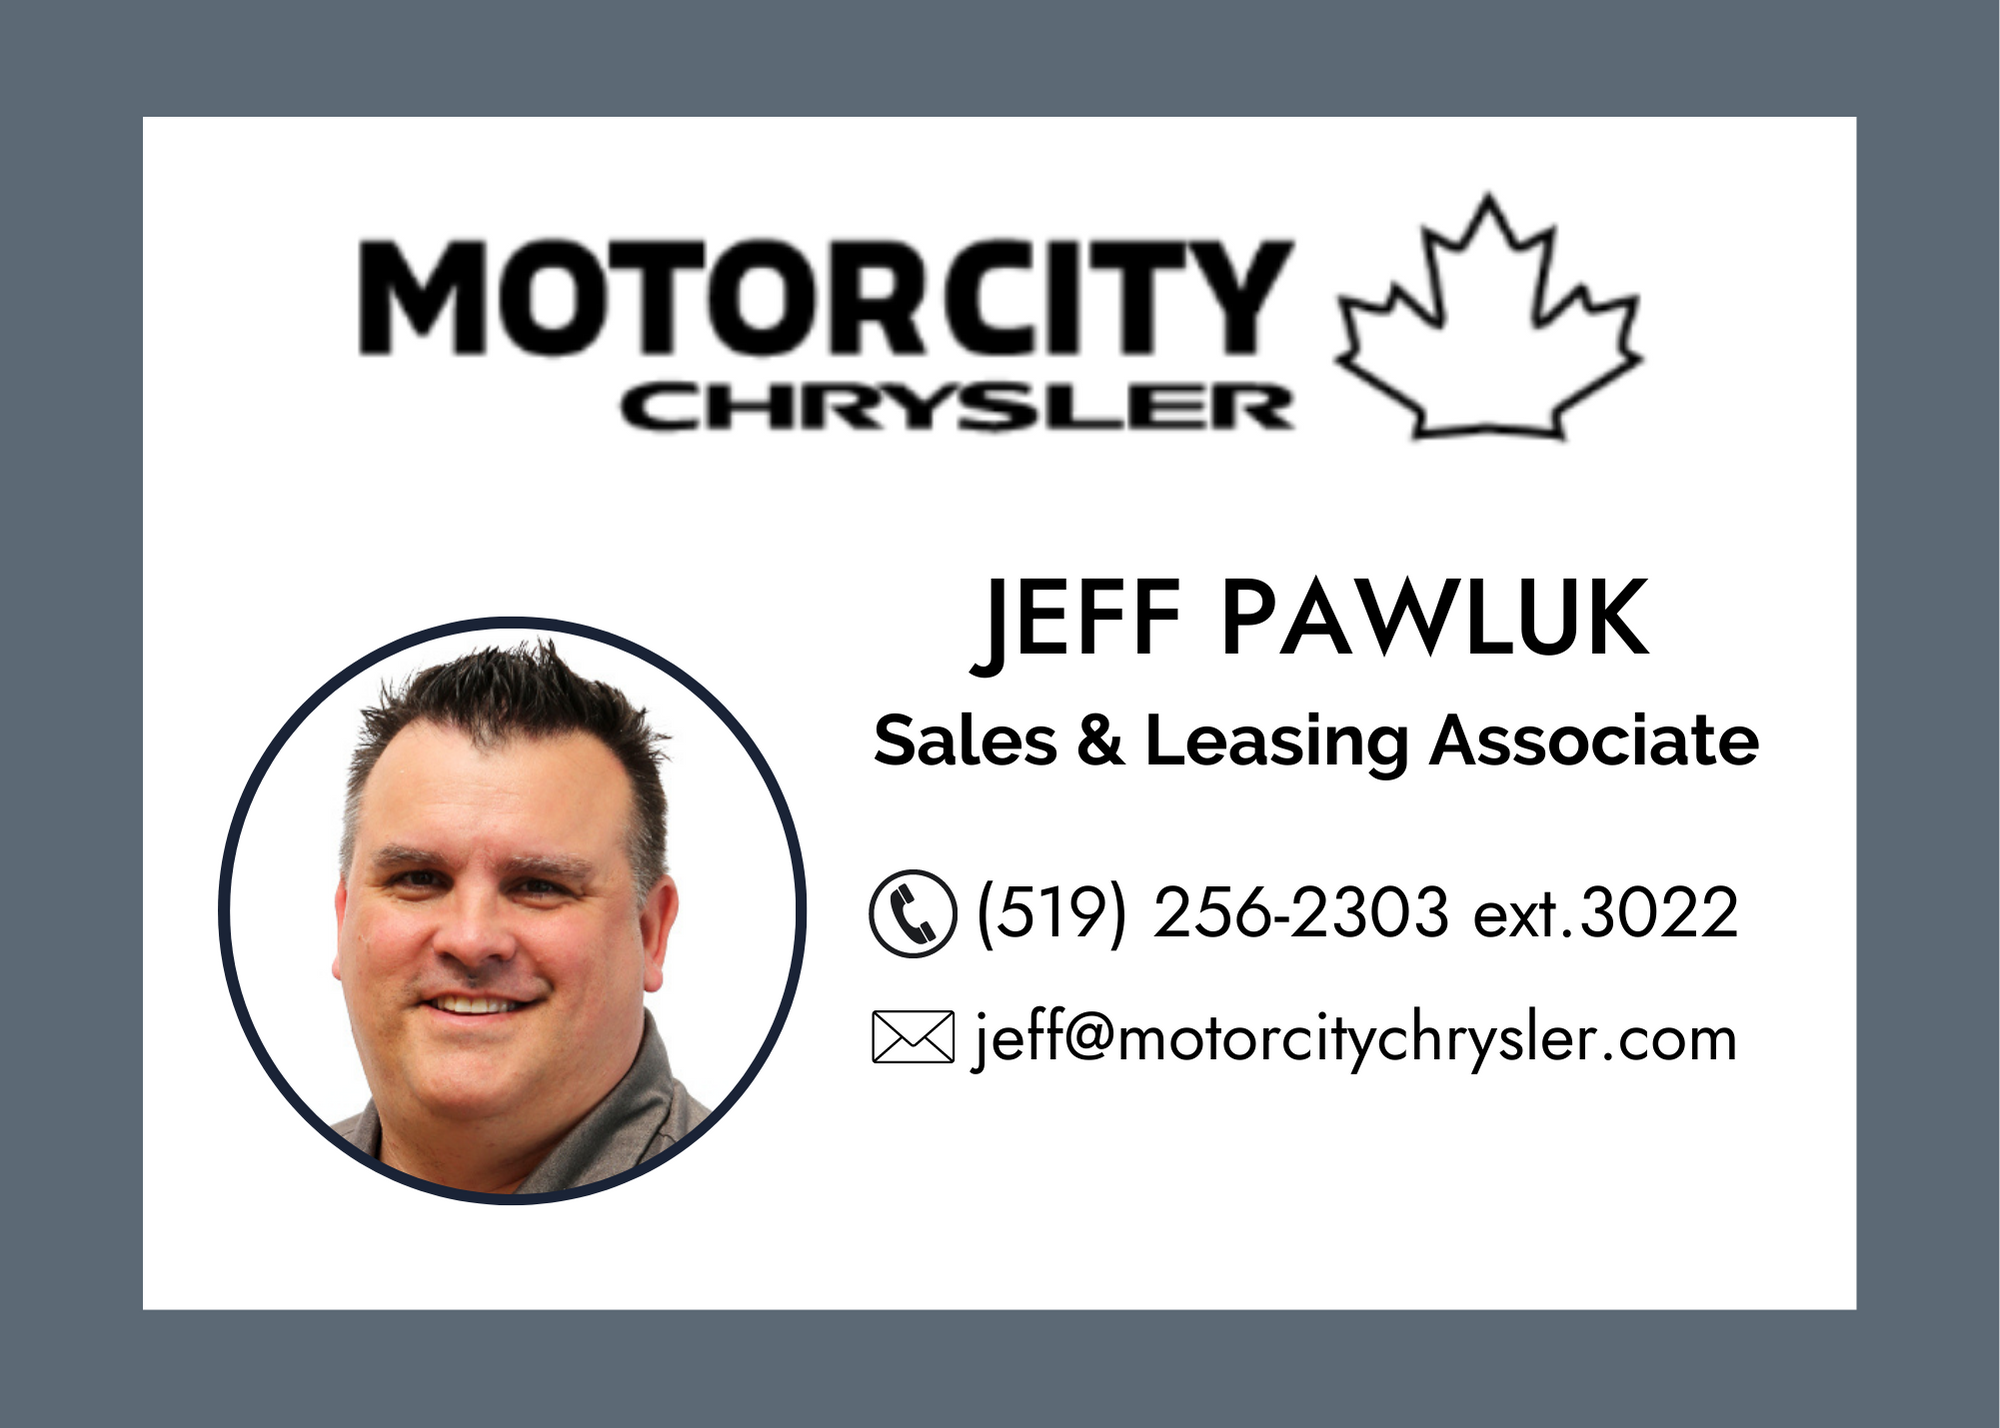 jeff pawluk sales & leasing associate, motorcity chrysler